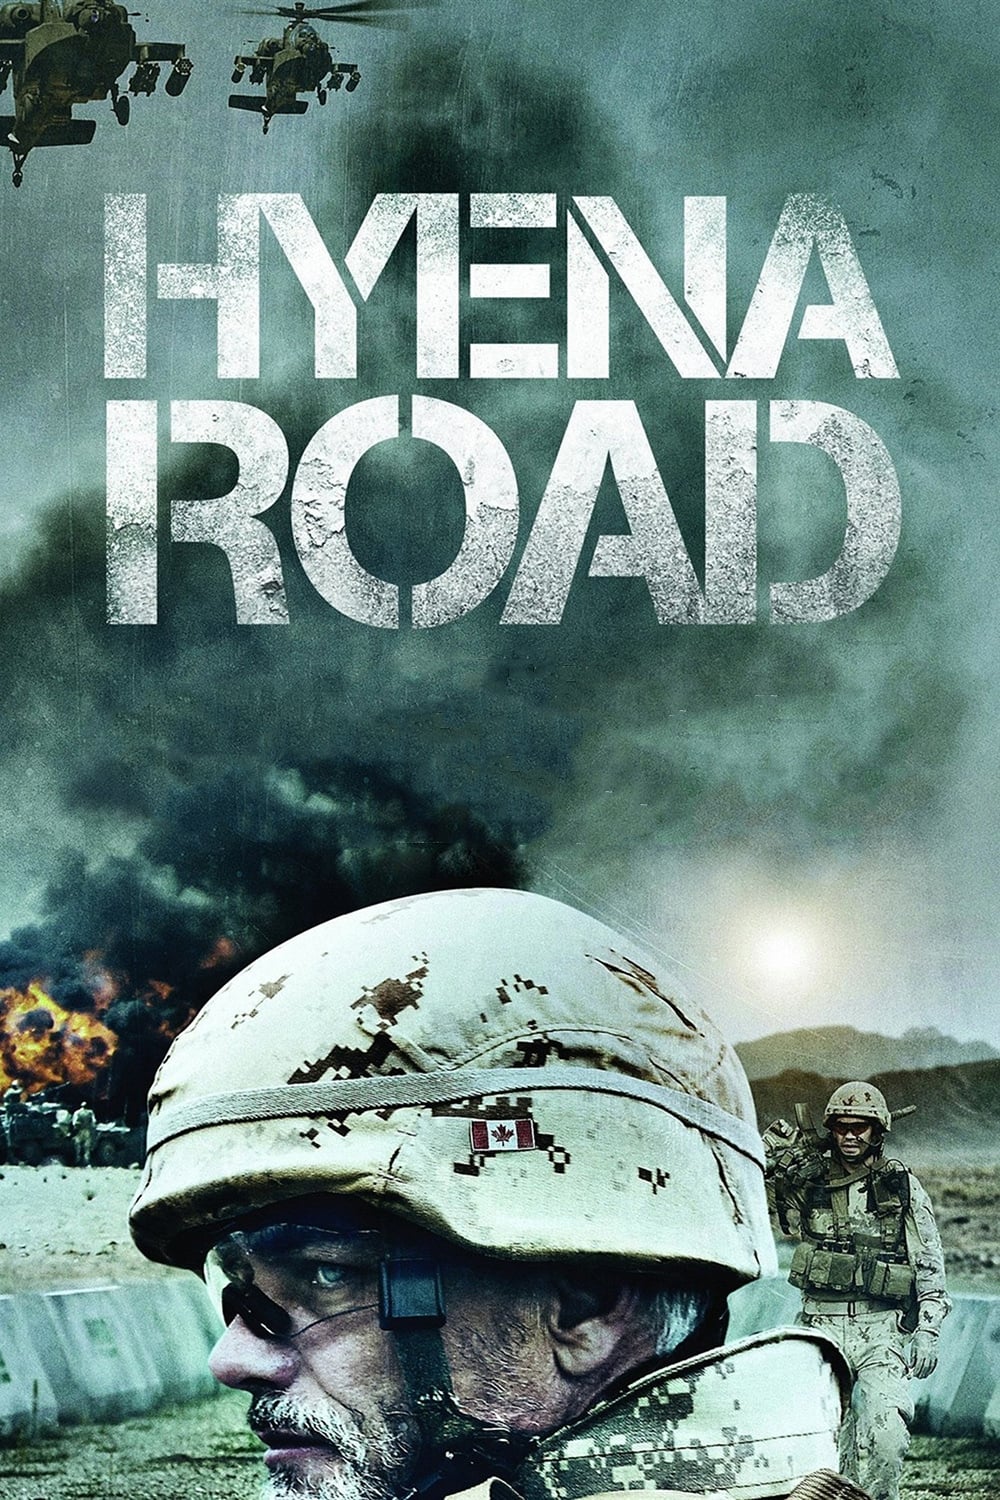 Con Đường Máu Lửa (Hyena Road) [2015]